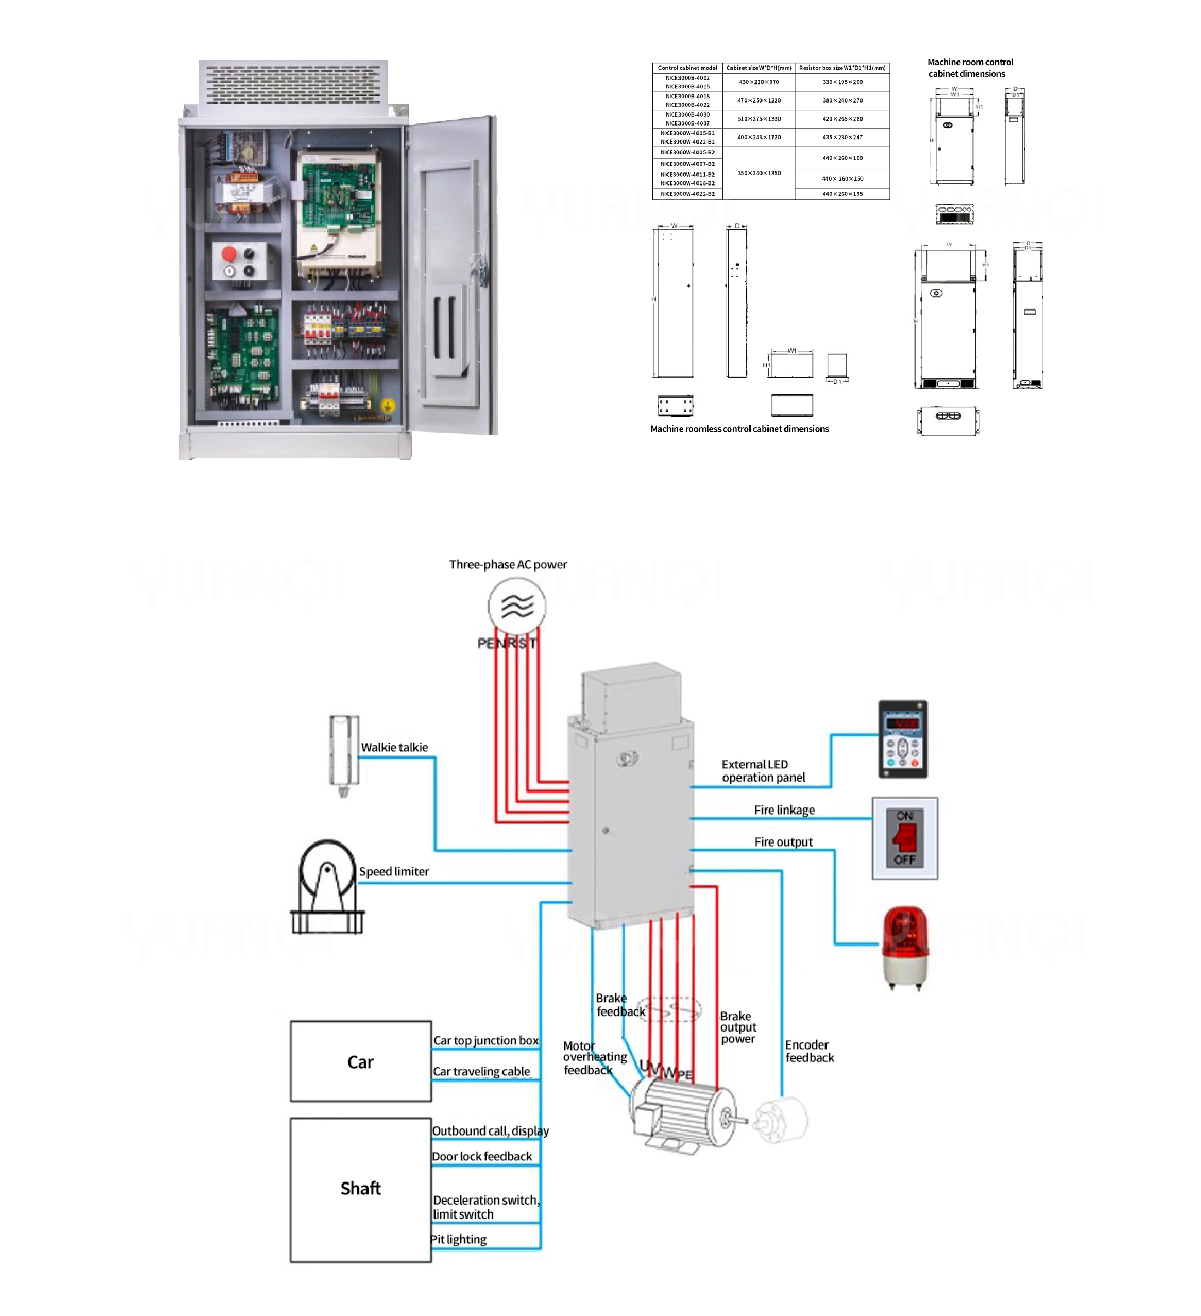 Monarch-Elevator-Control-Cabinet-Elevator-Integrated-Drive-Control-Modular-Interface-Board...